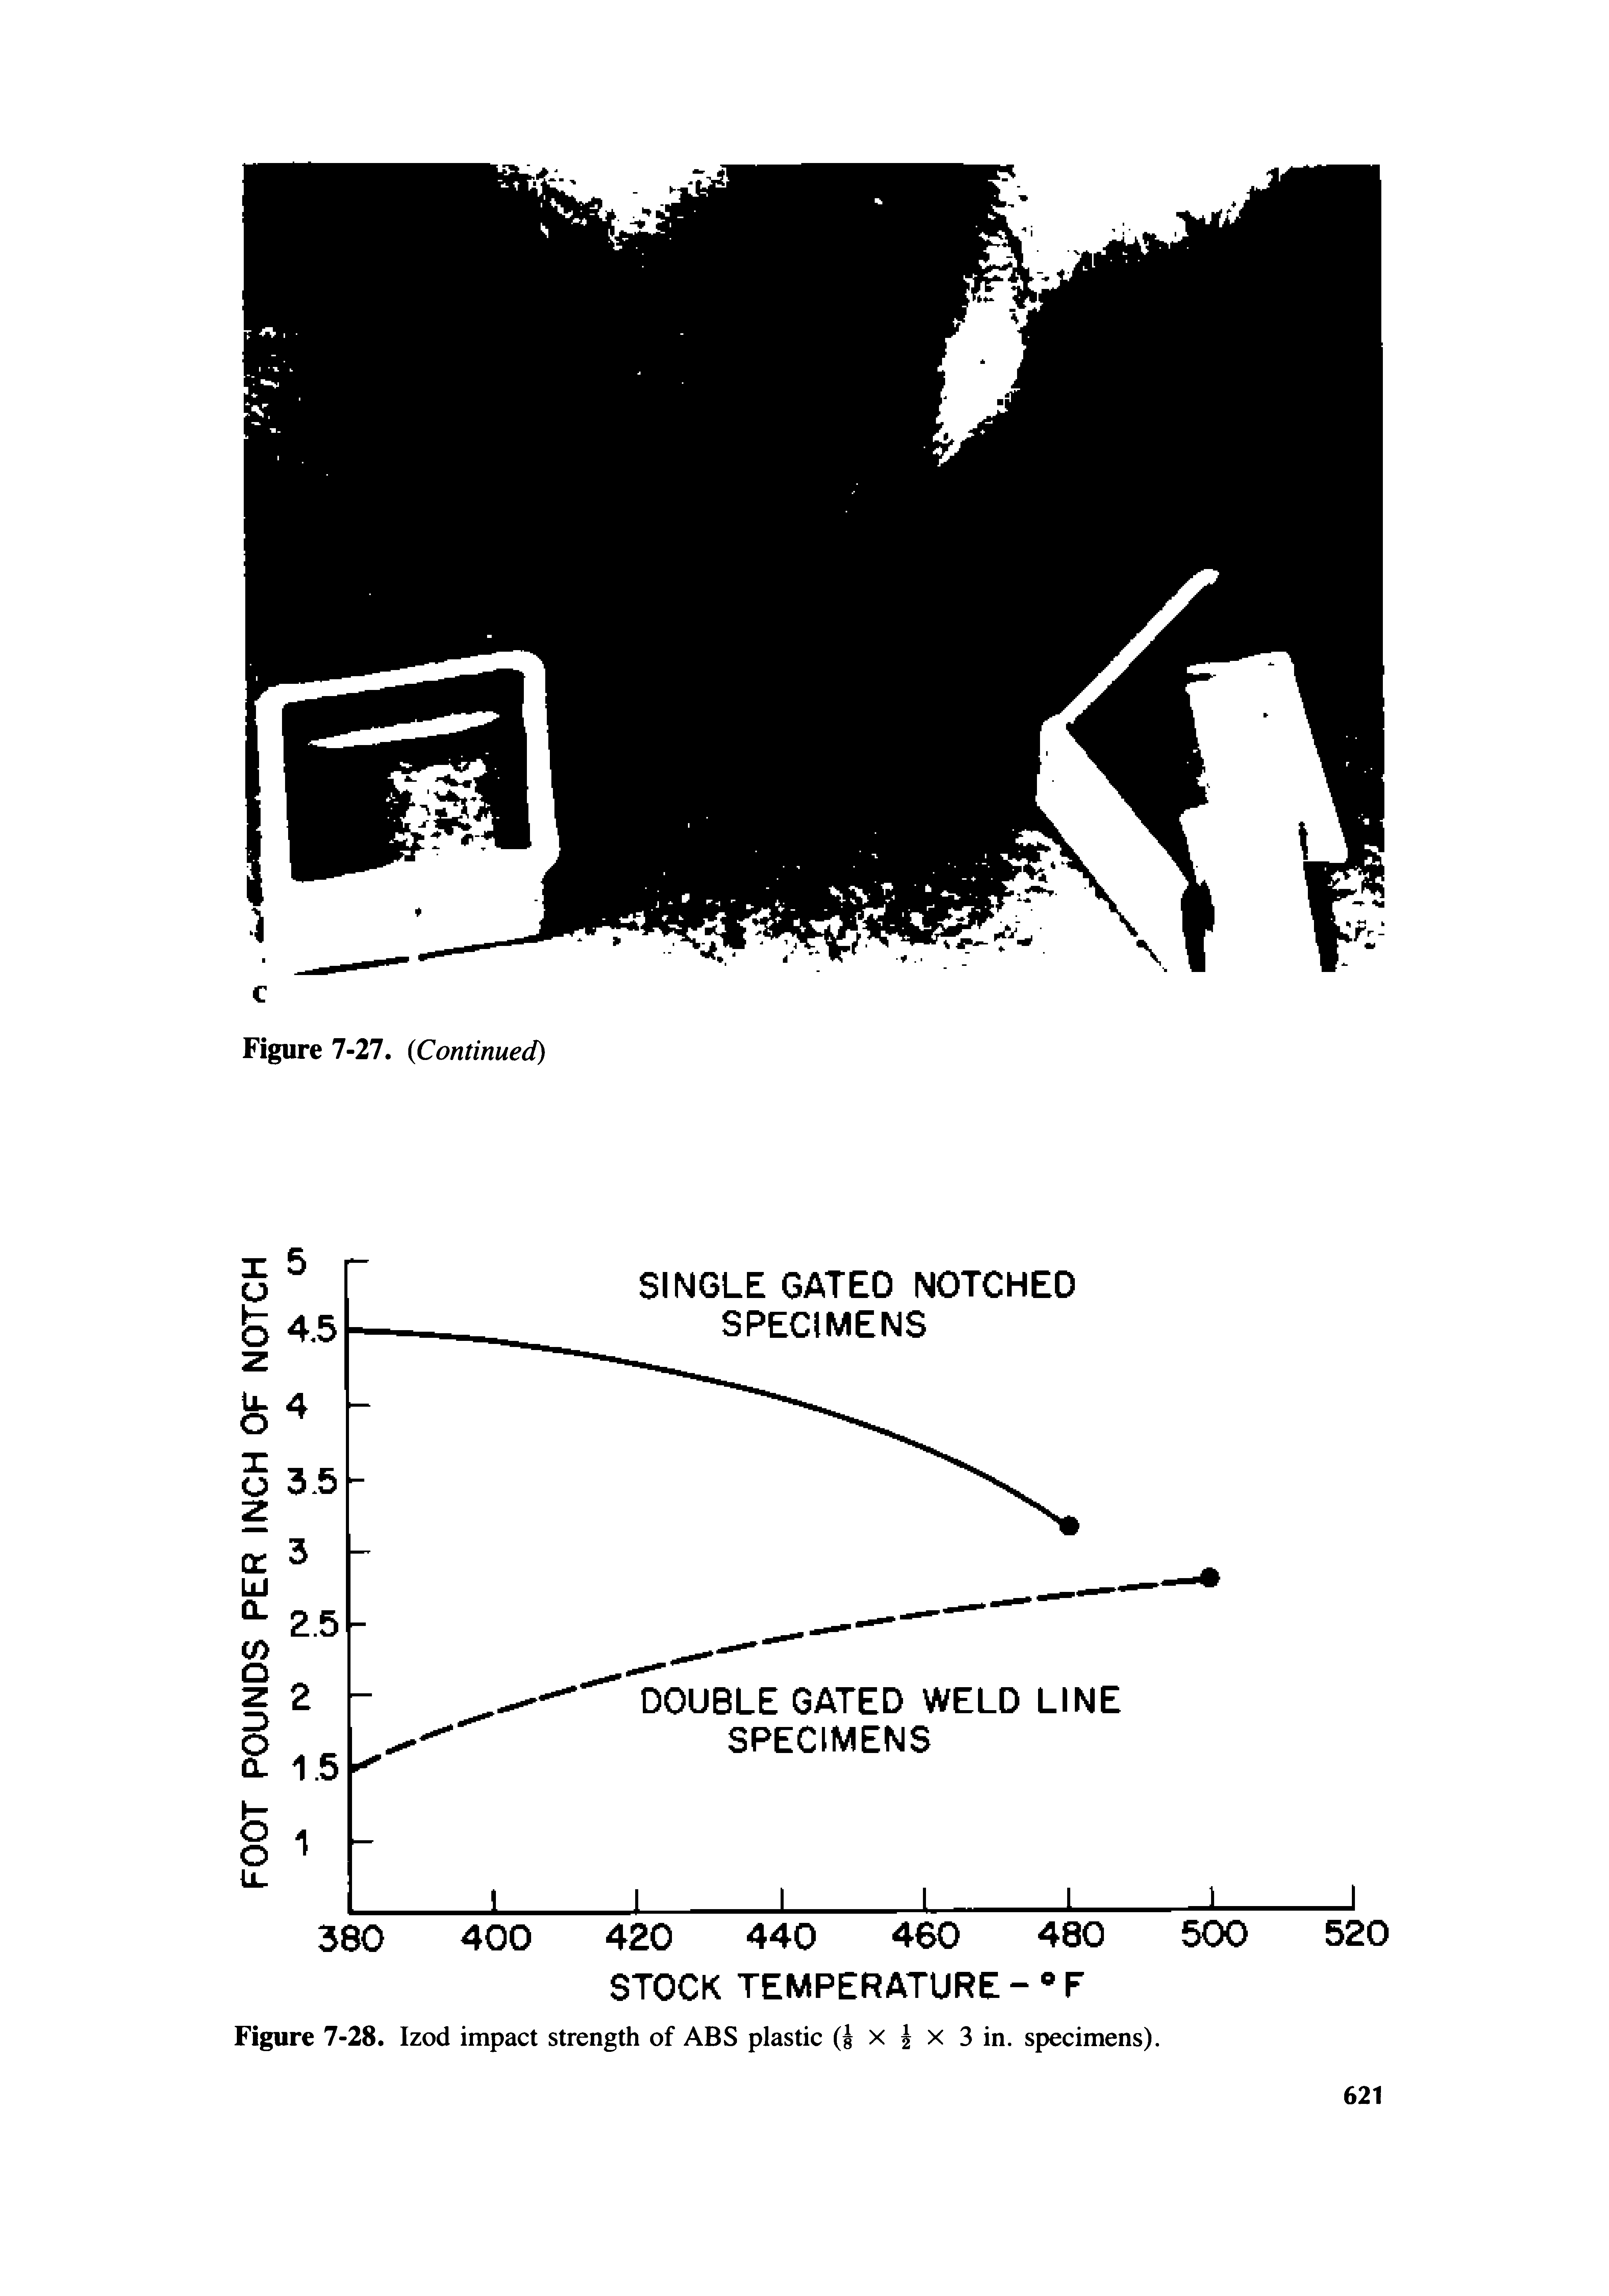 Figure 7-28. Izod impact strength of ABS plastic (4 x x 3 in. specimens).